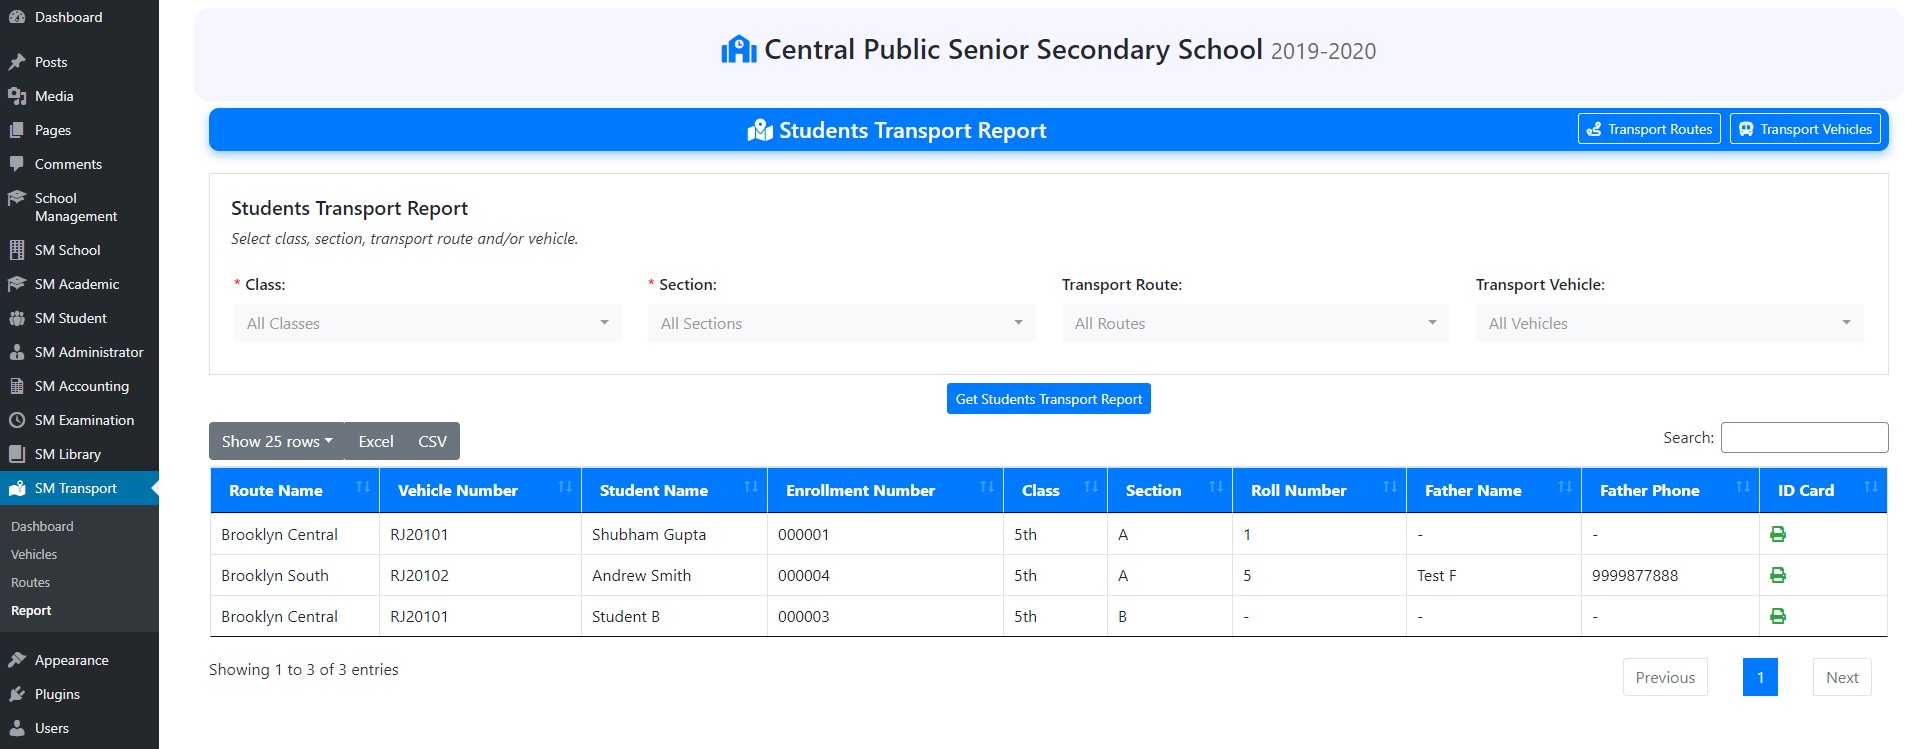 Students Transport Report